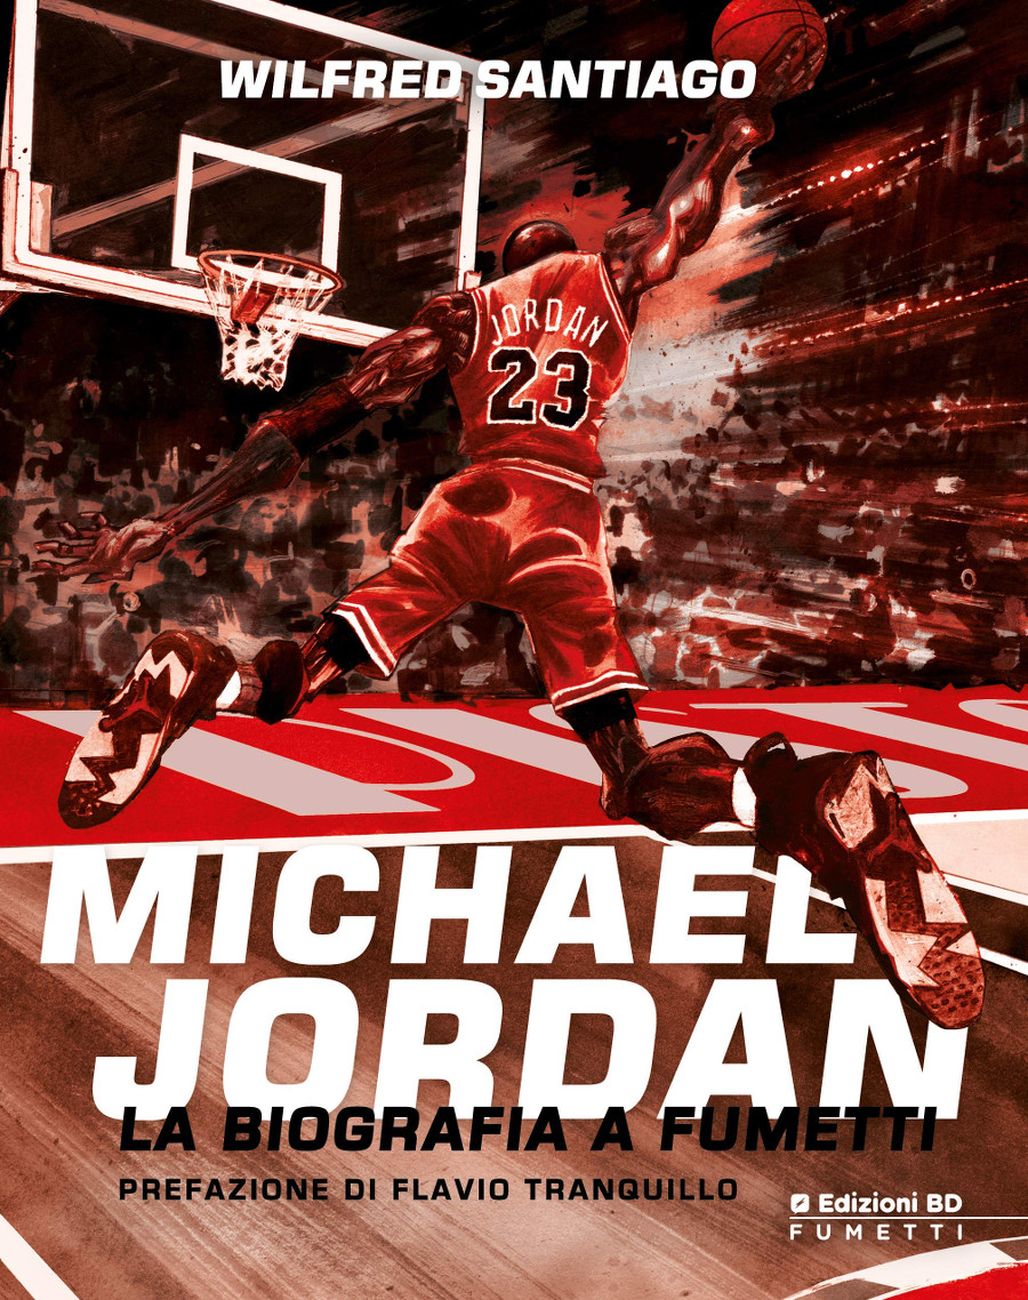 Wilfred Santiago ‒ Michael Jordan. La biografia a fumetti (Edizioni BD, Milano 2015)